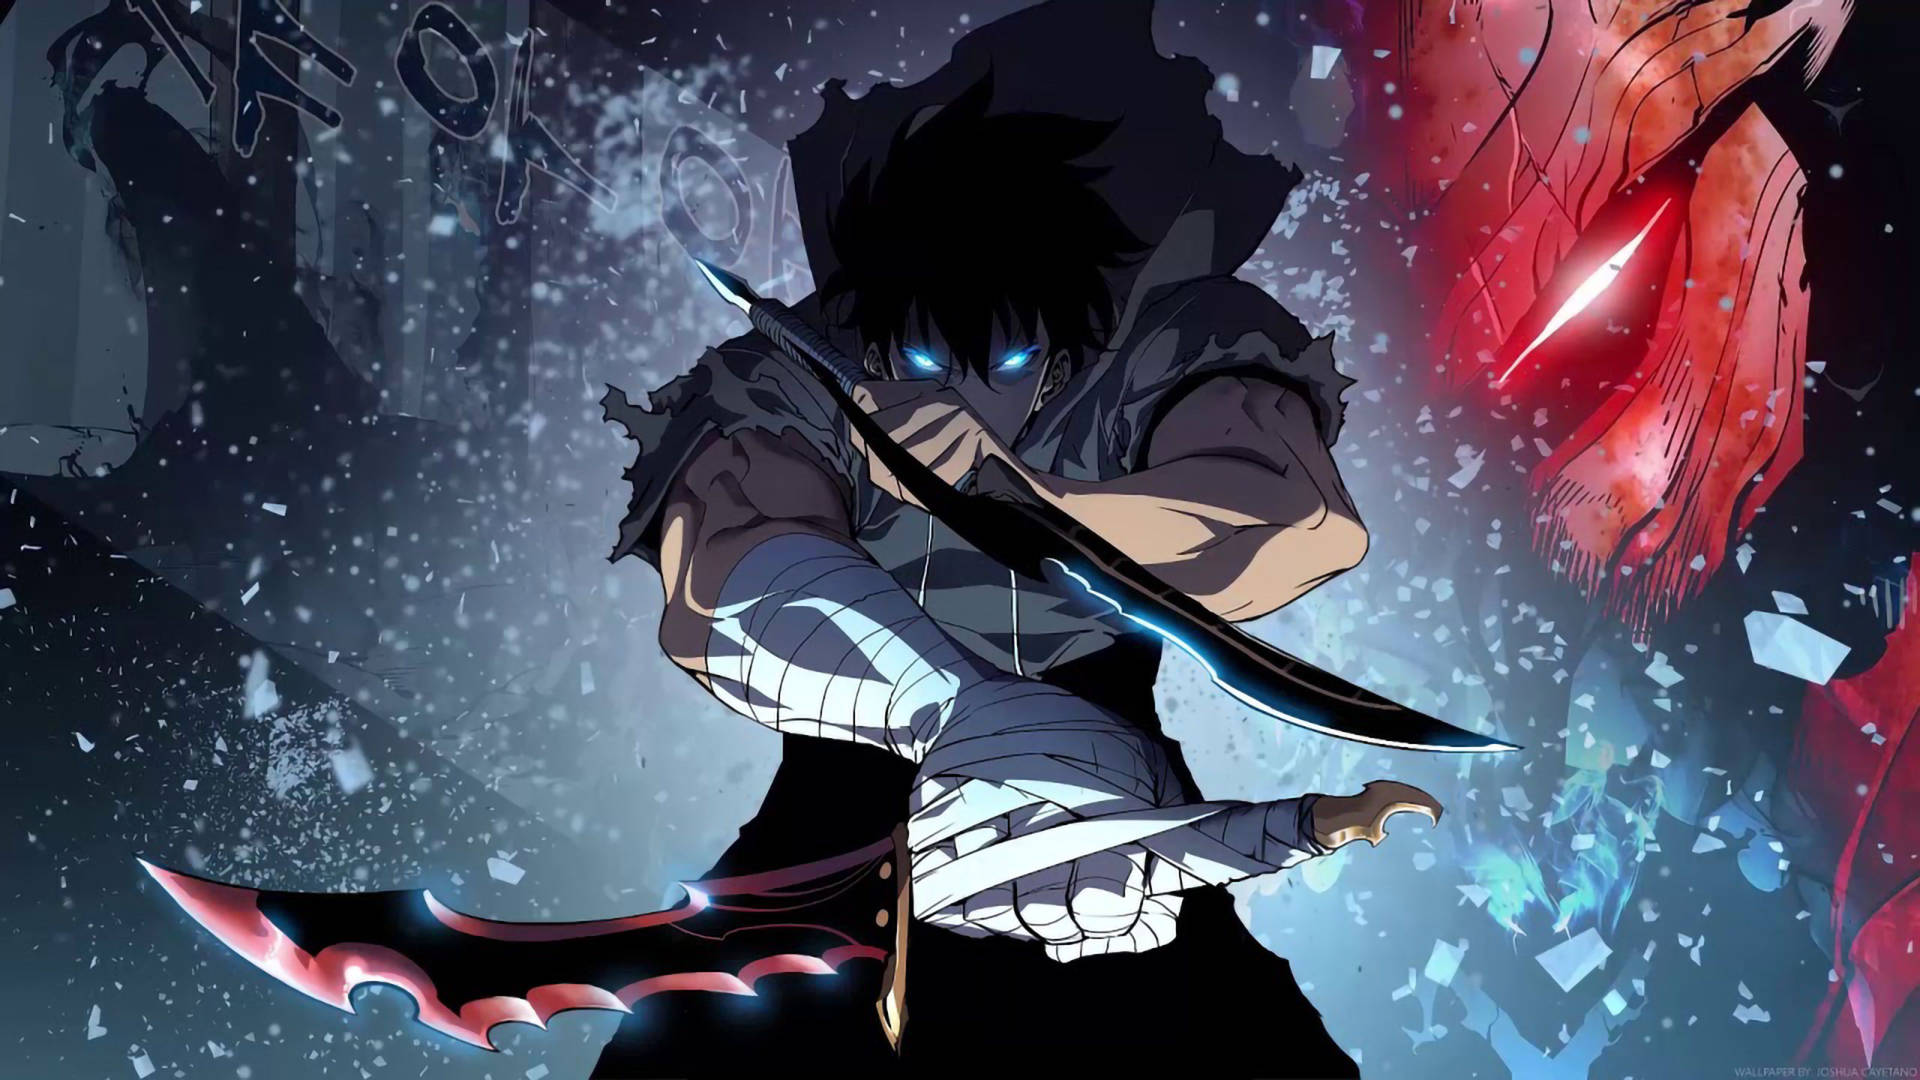 Animegaming Sword Fighter - Luchador De Espadas De Anime Y Videojuegos. Fondo de pantalla